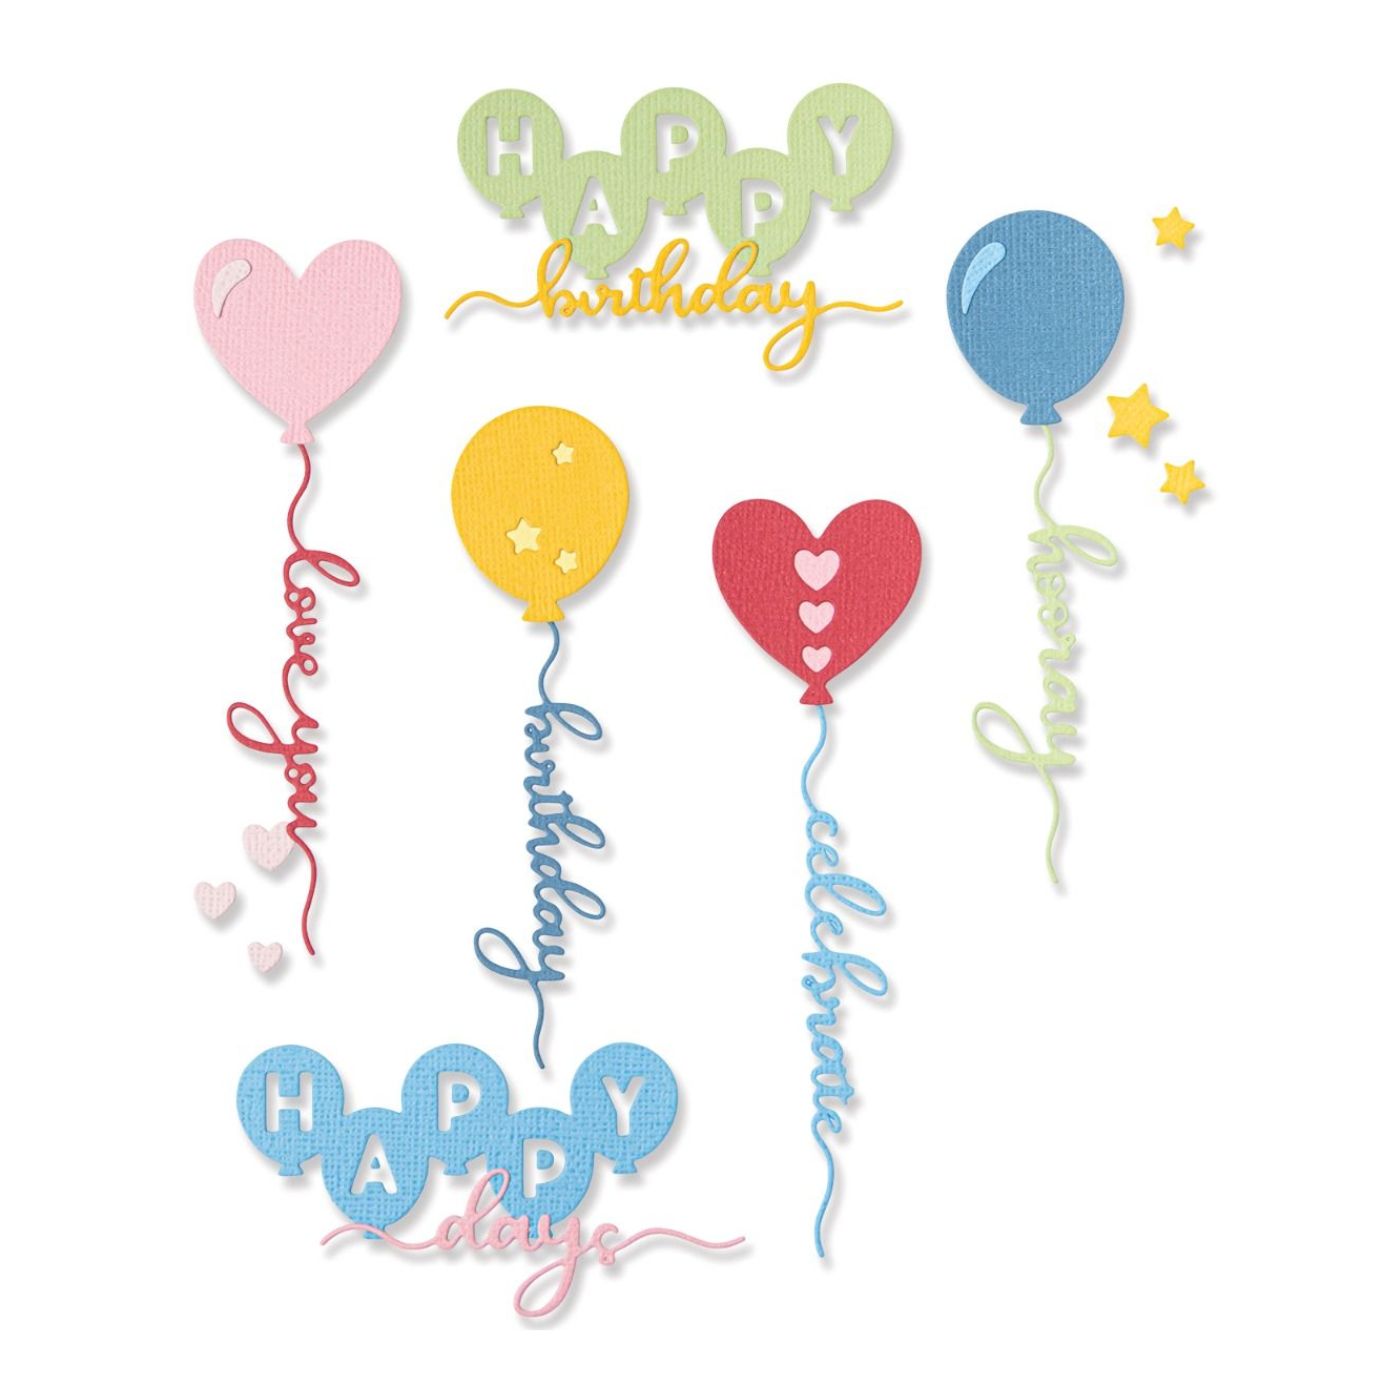 Troqueles Thinlits Balloon Occasions - Cumpleaños